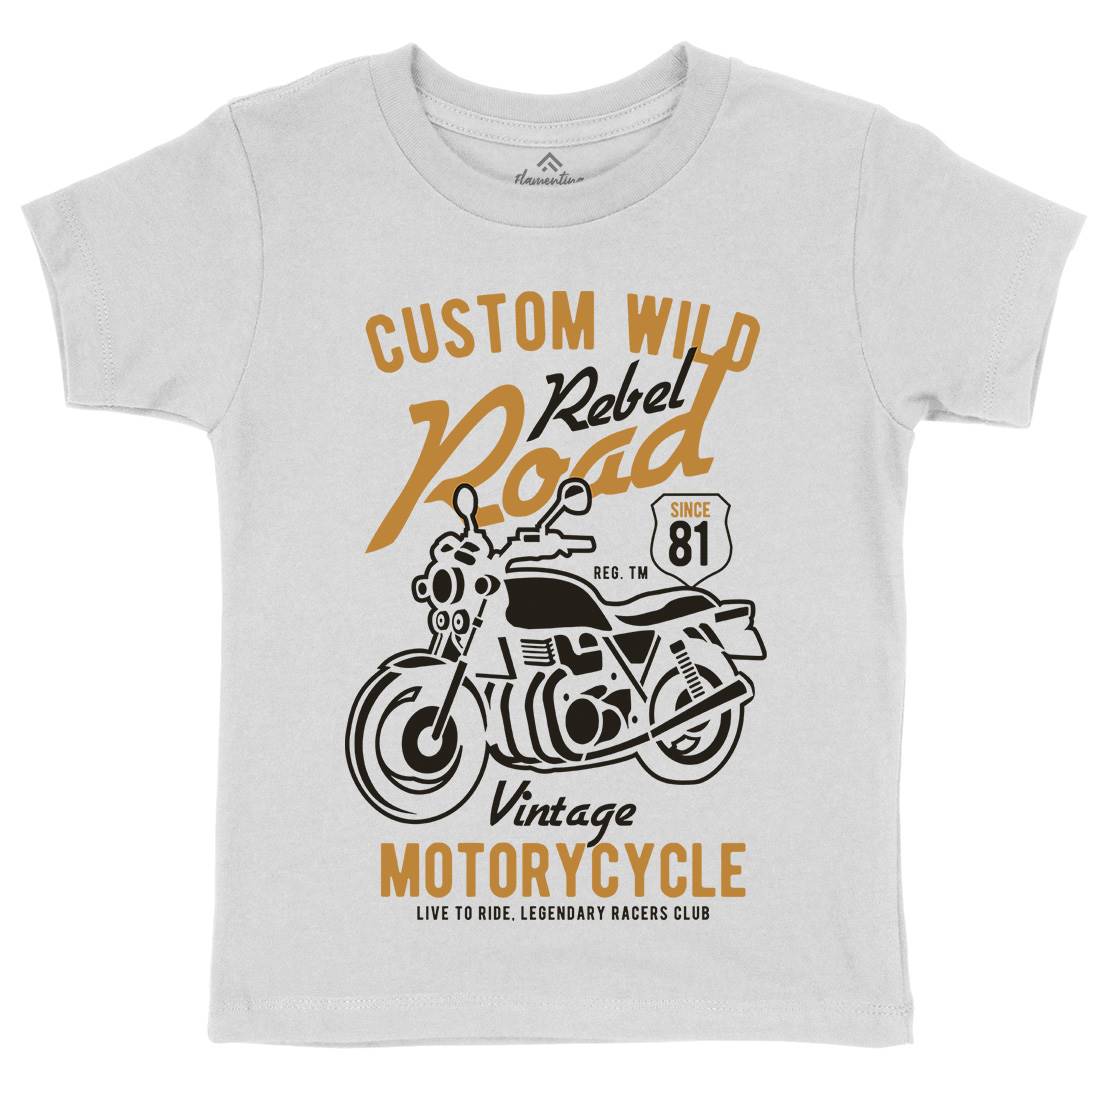 Custom Wild Kids Crew Neck T-Shirt Motorcycles B399